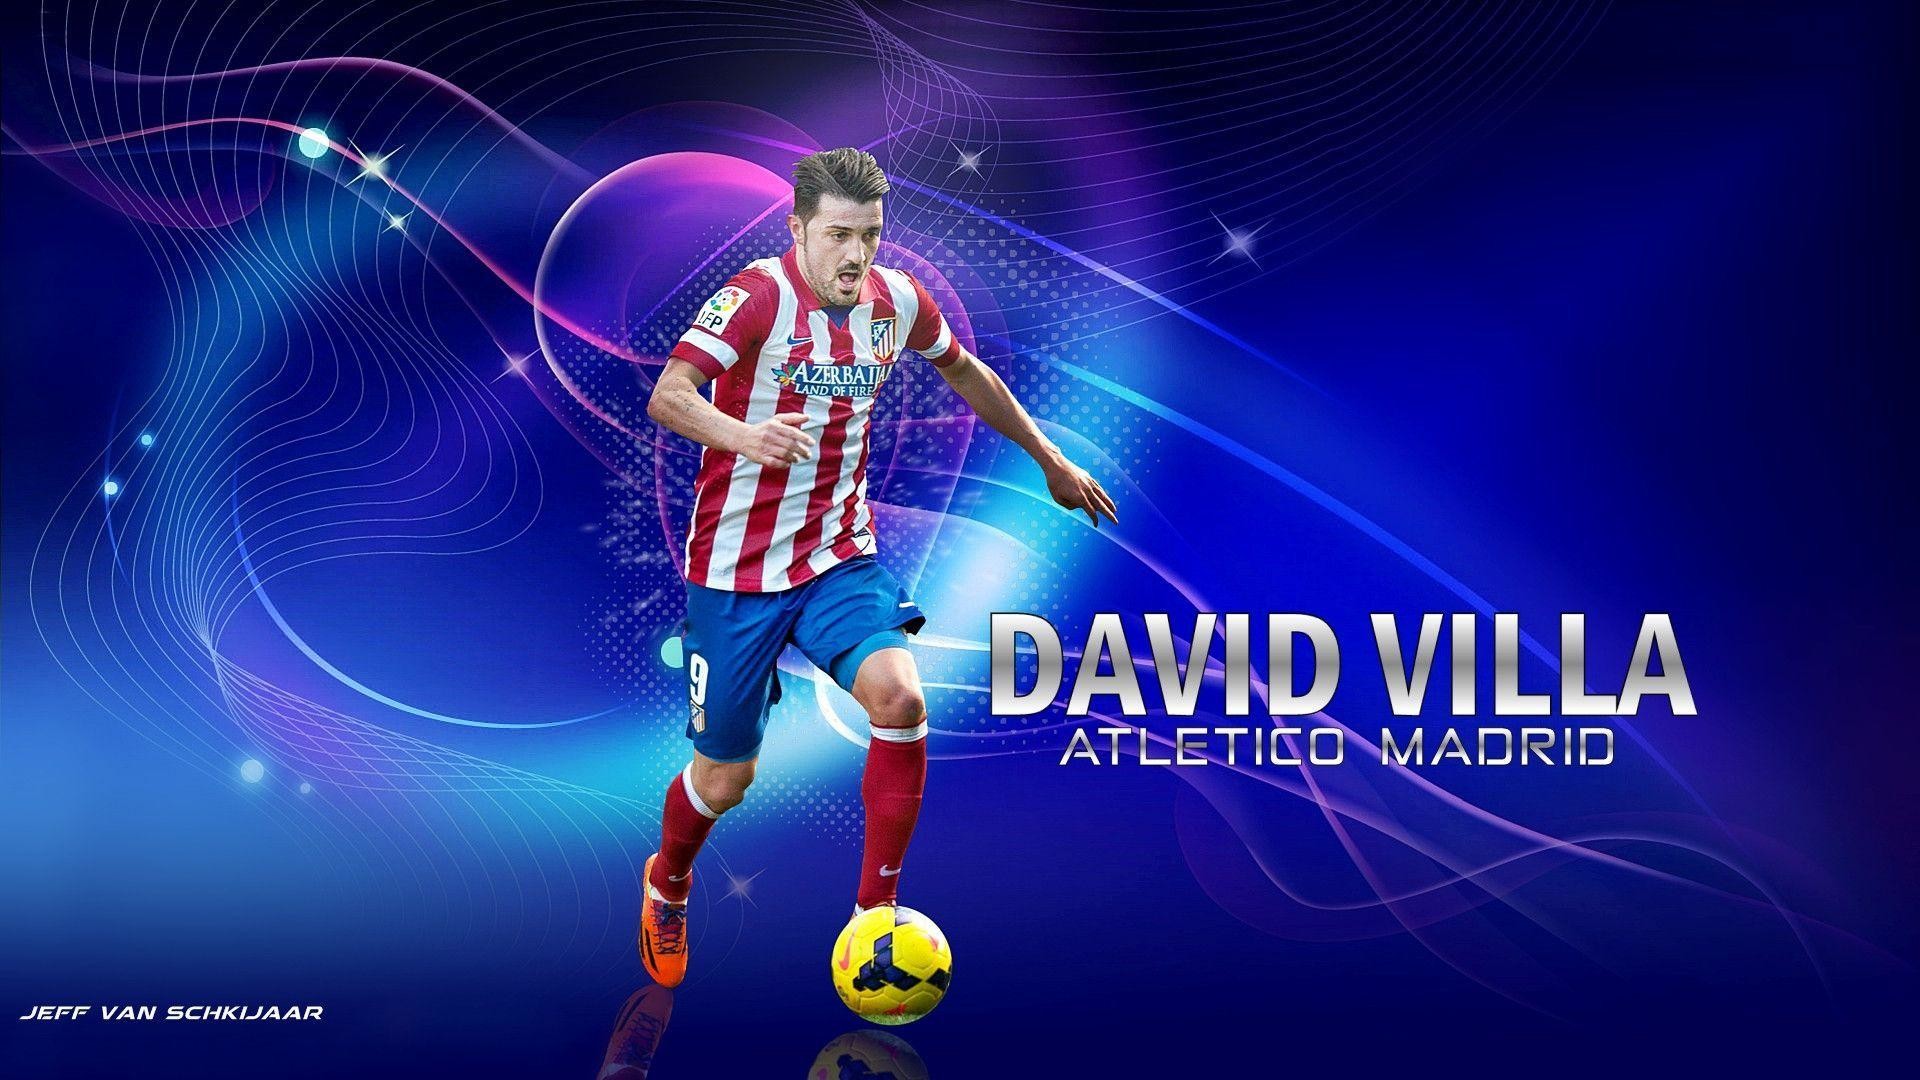 1920x1080 David Villa Atletico Madrid Wallpaper by jeffery10 on DeviantArt